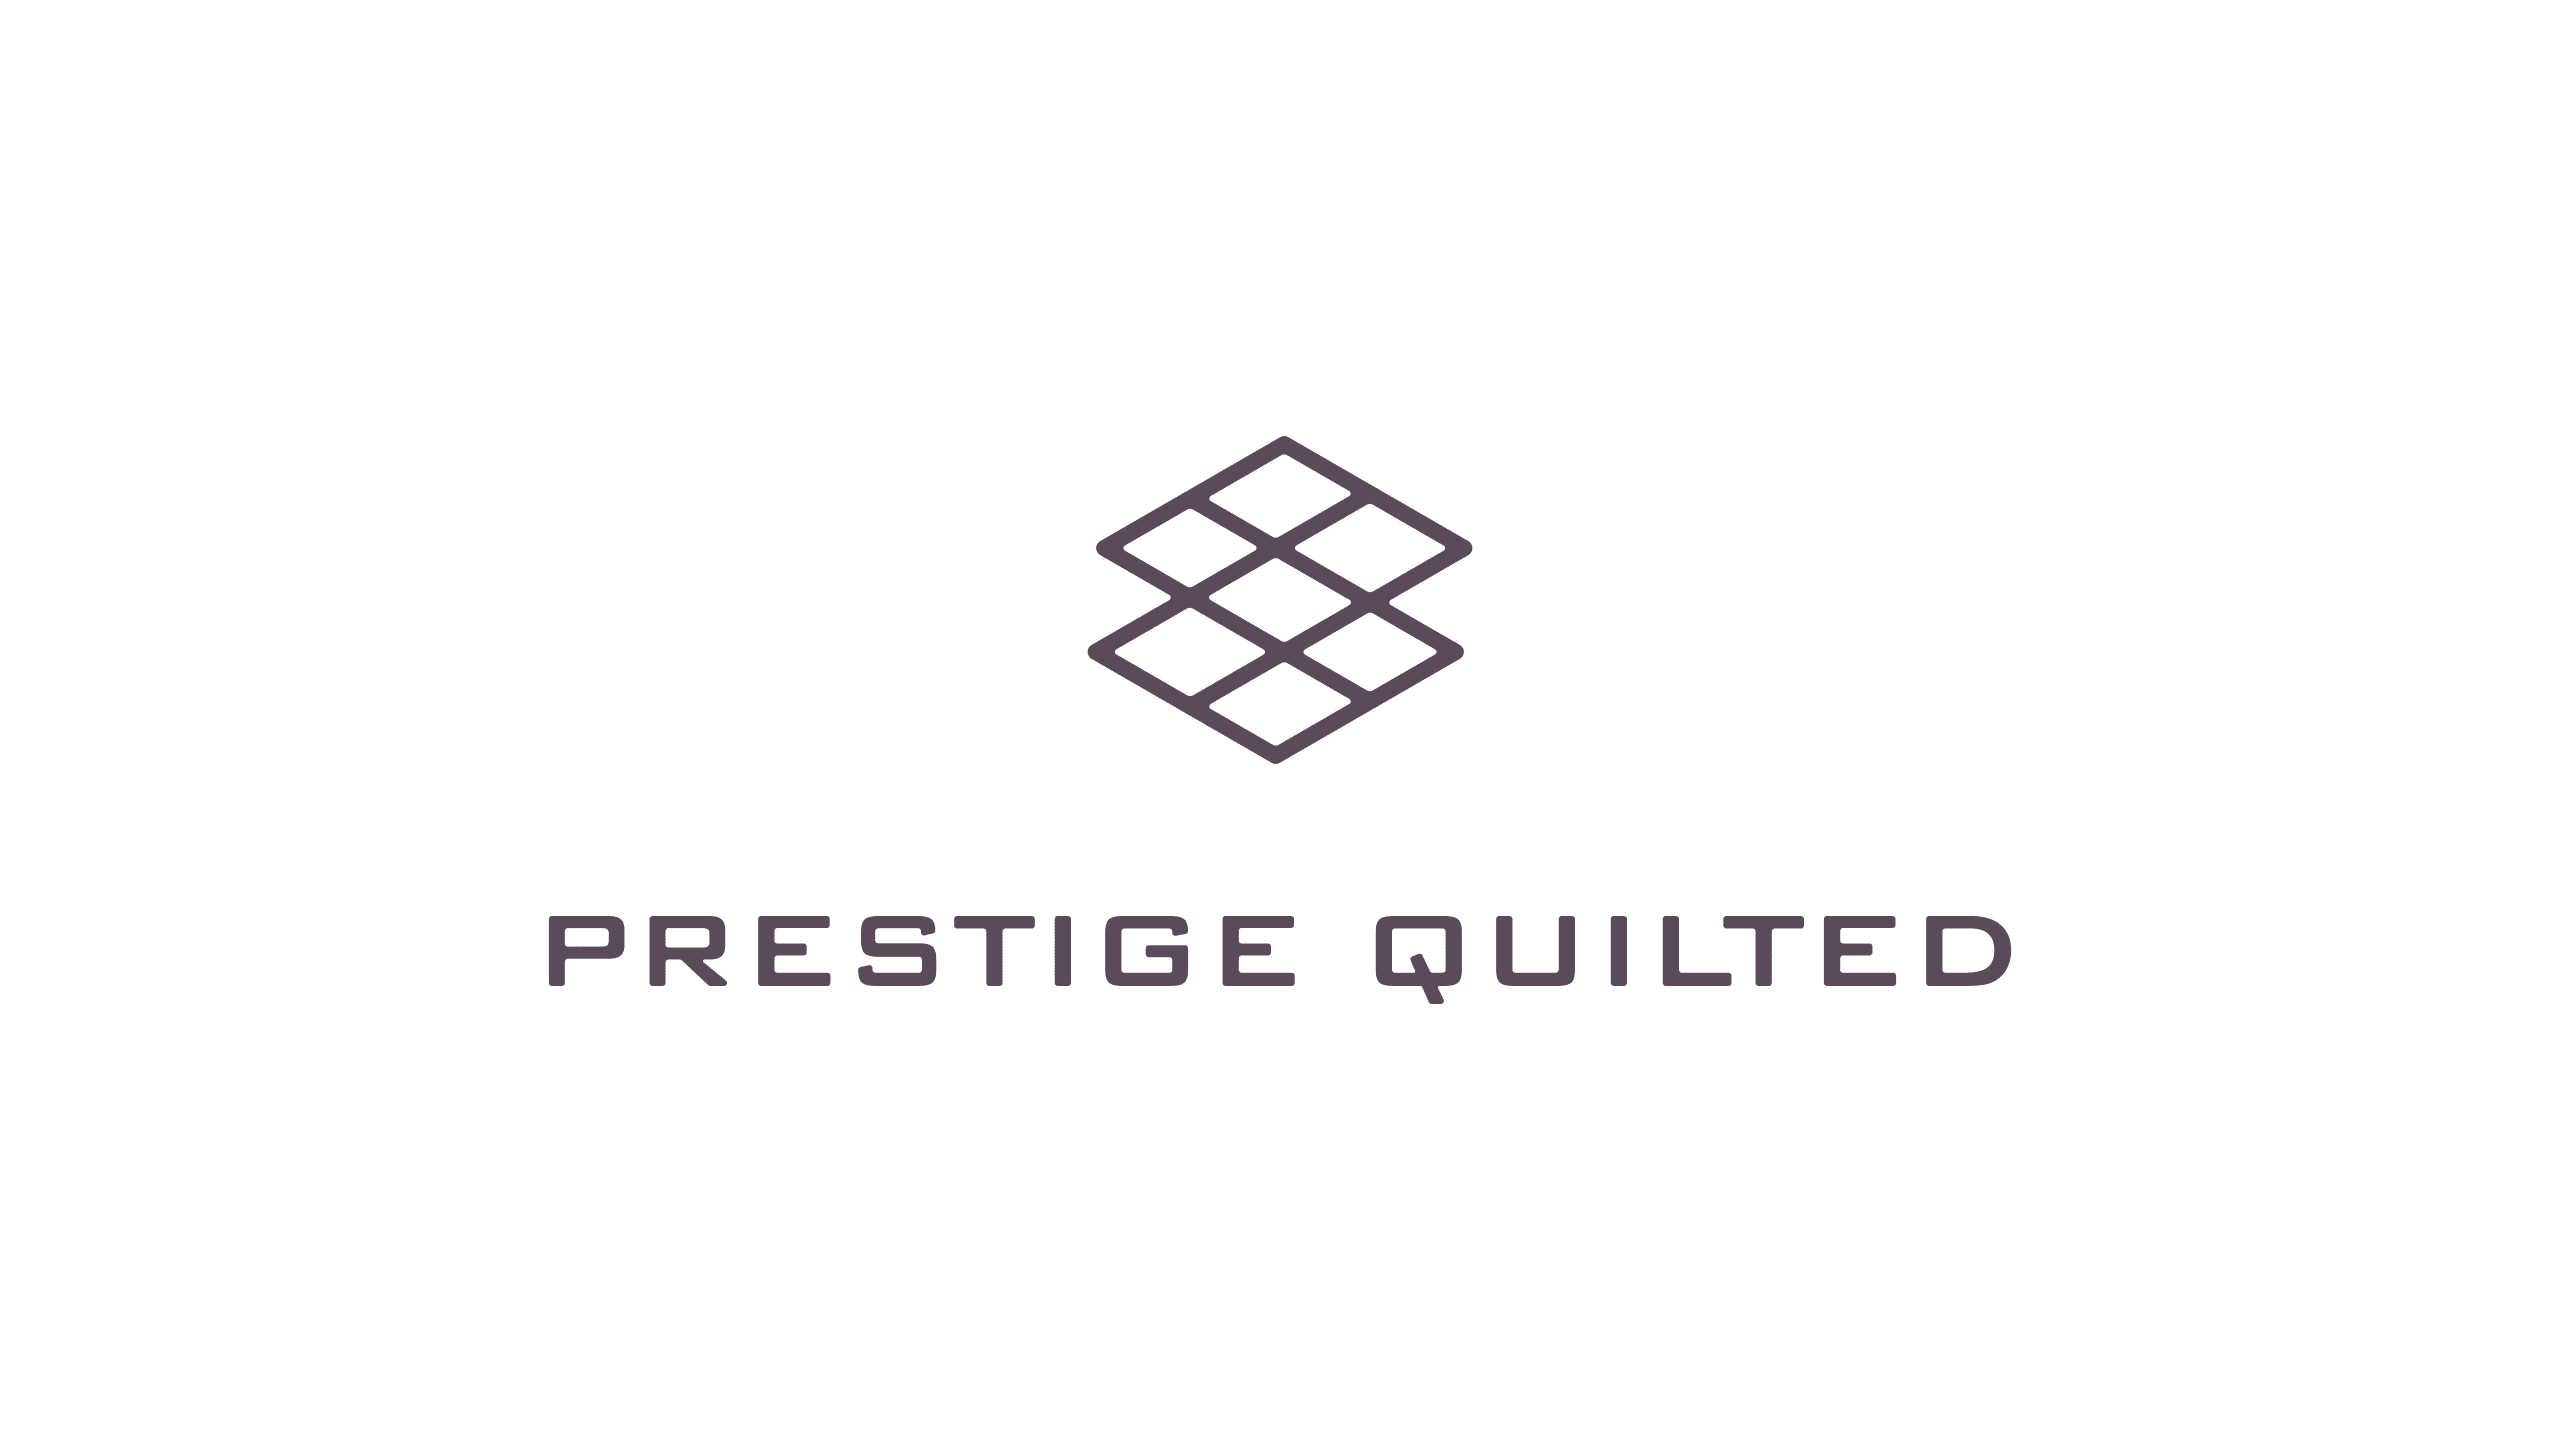 Prestige quilted logo